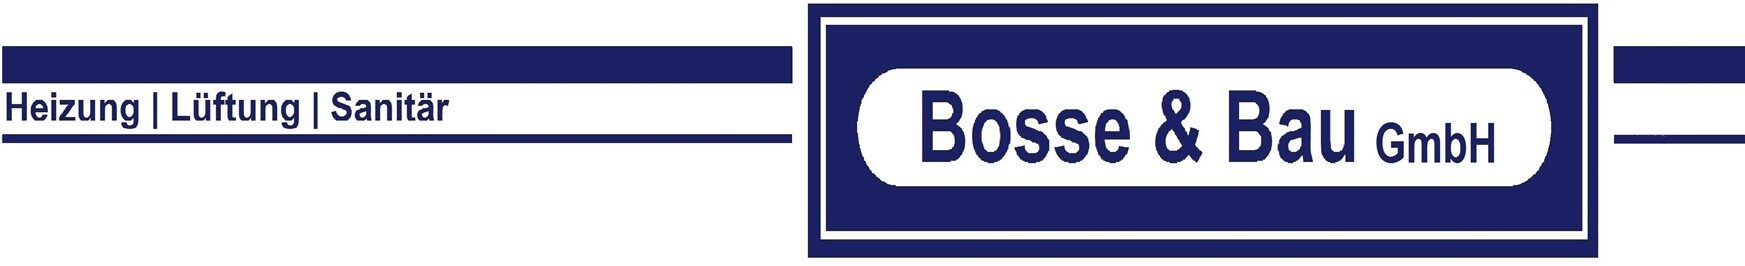 Bosse & Bau GmbH